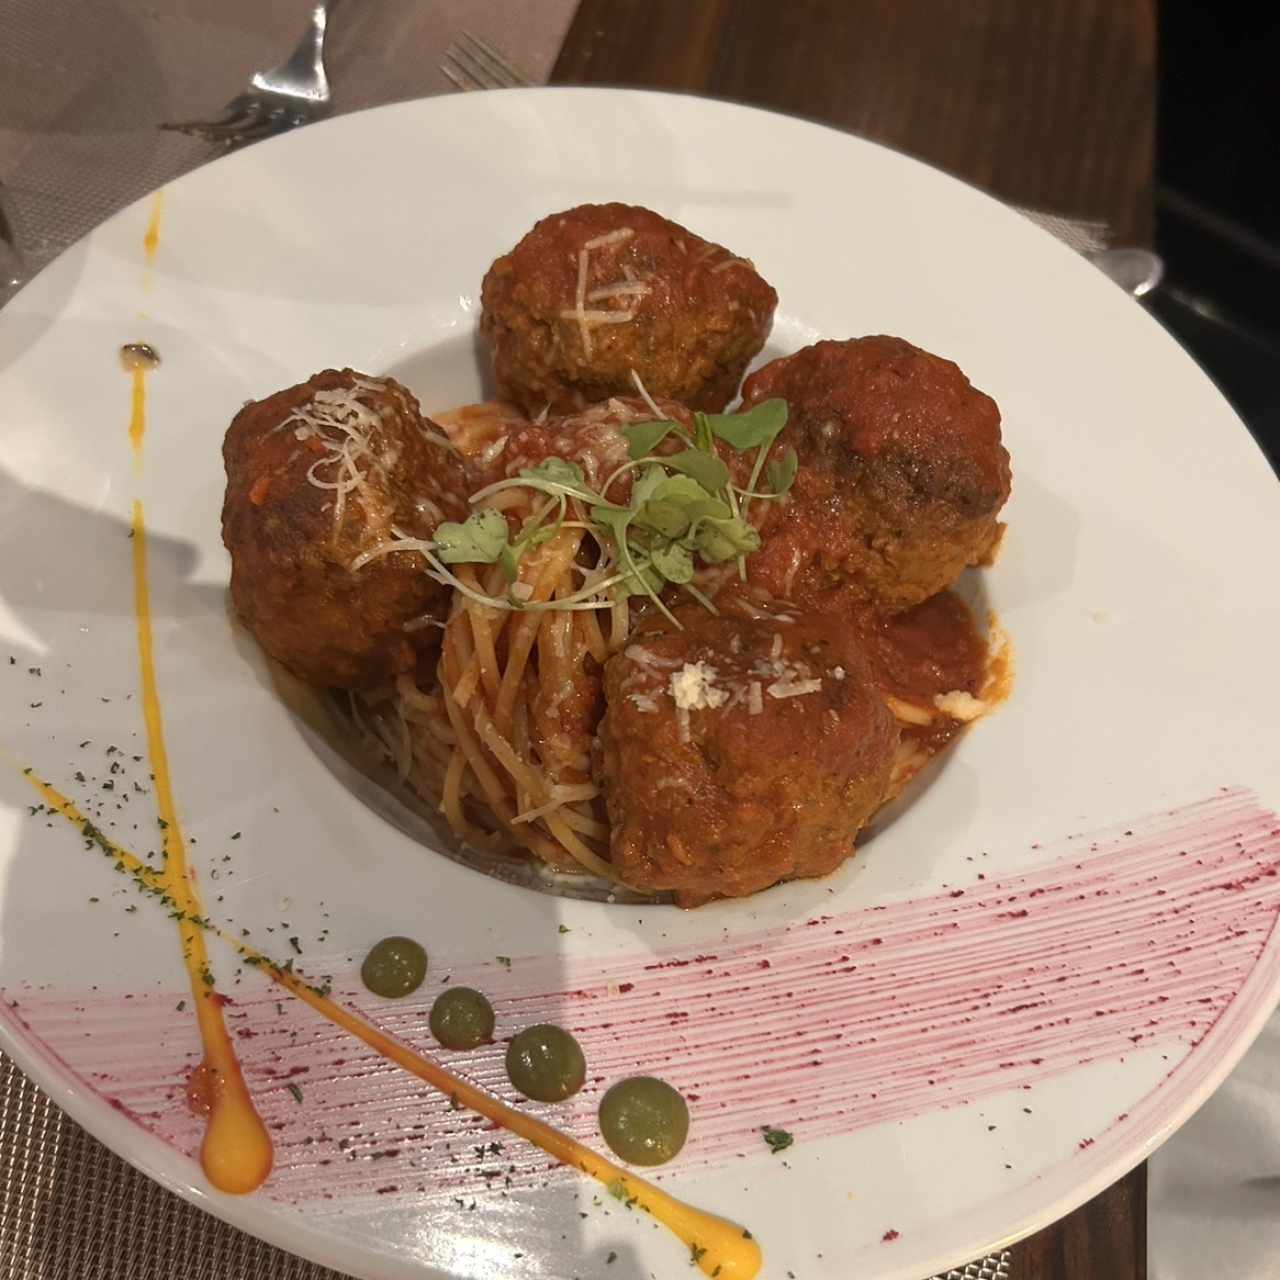 Pastas - Spaghetti and Meatballs